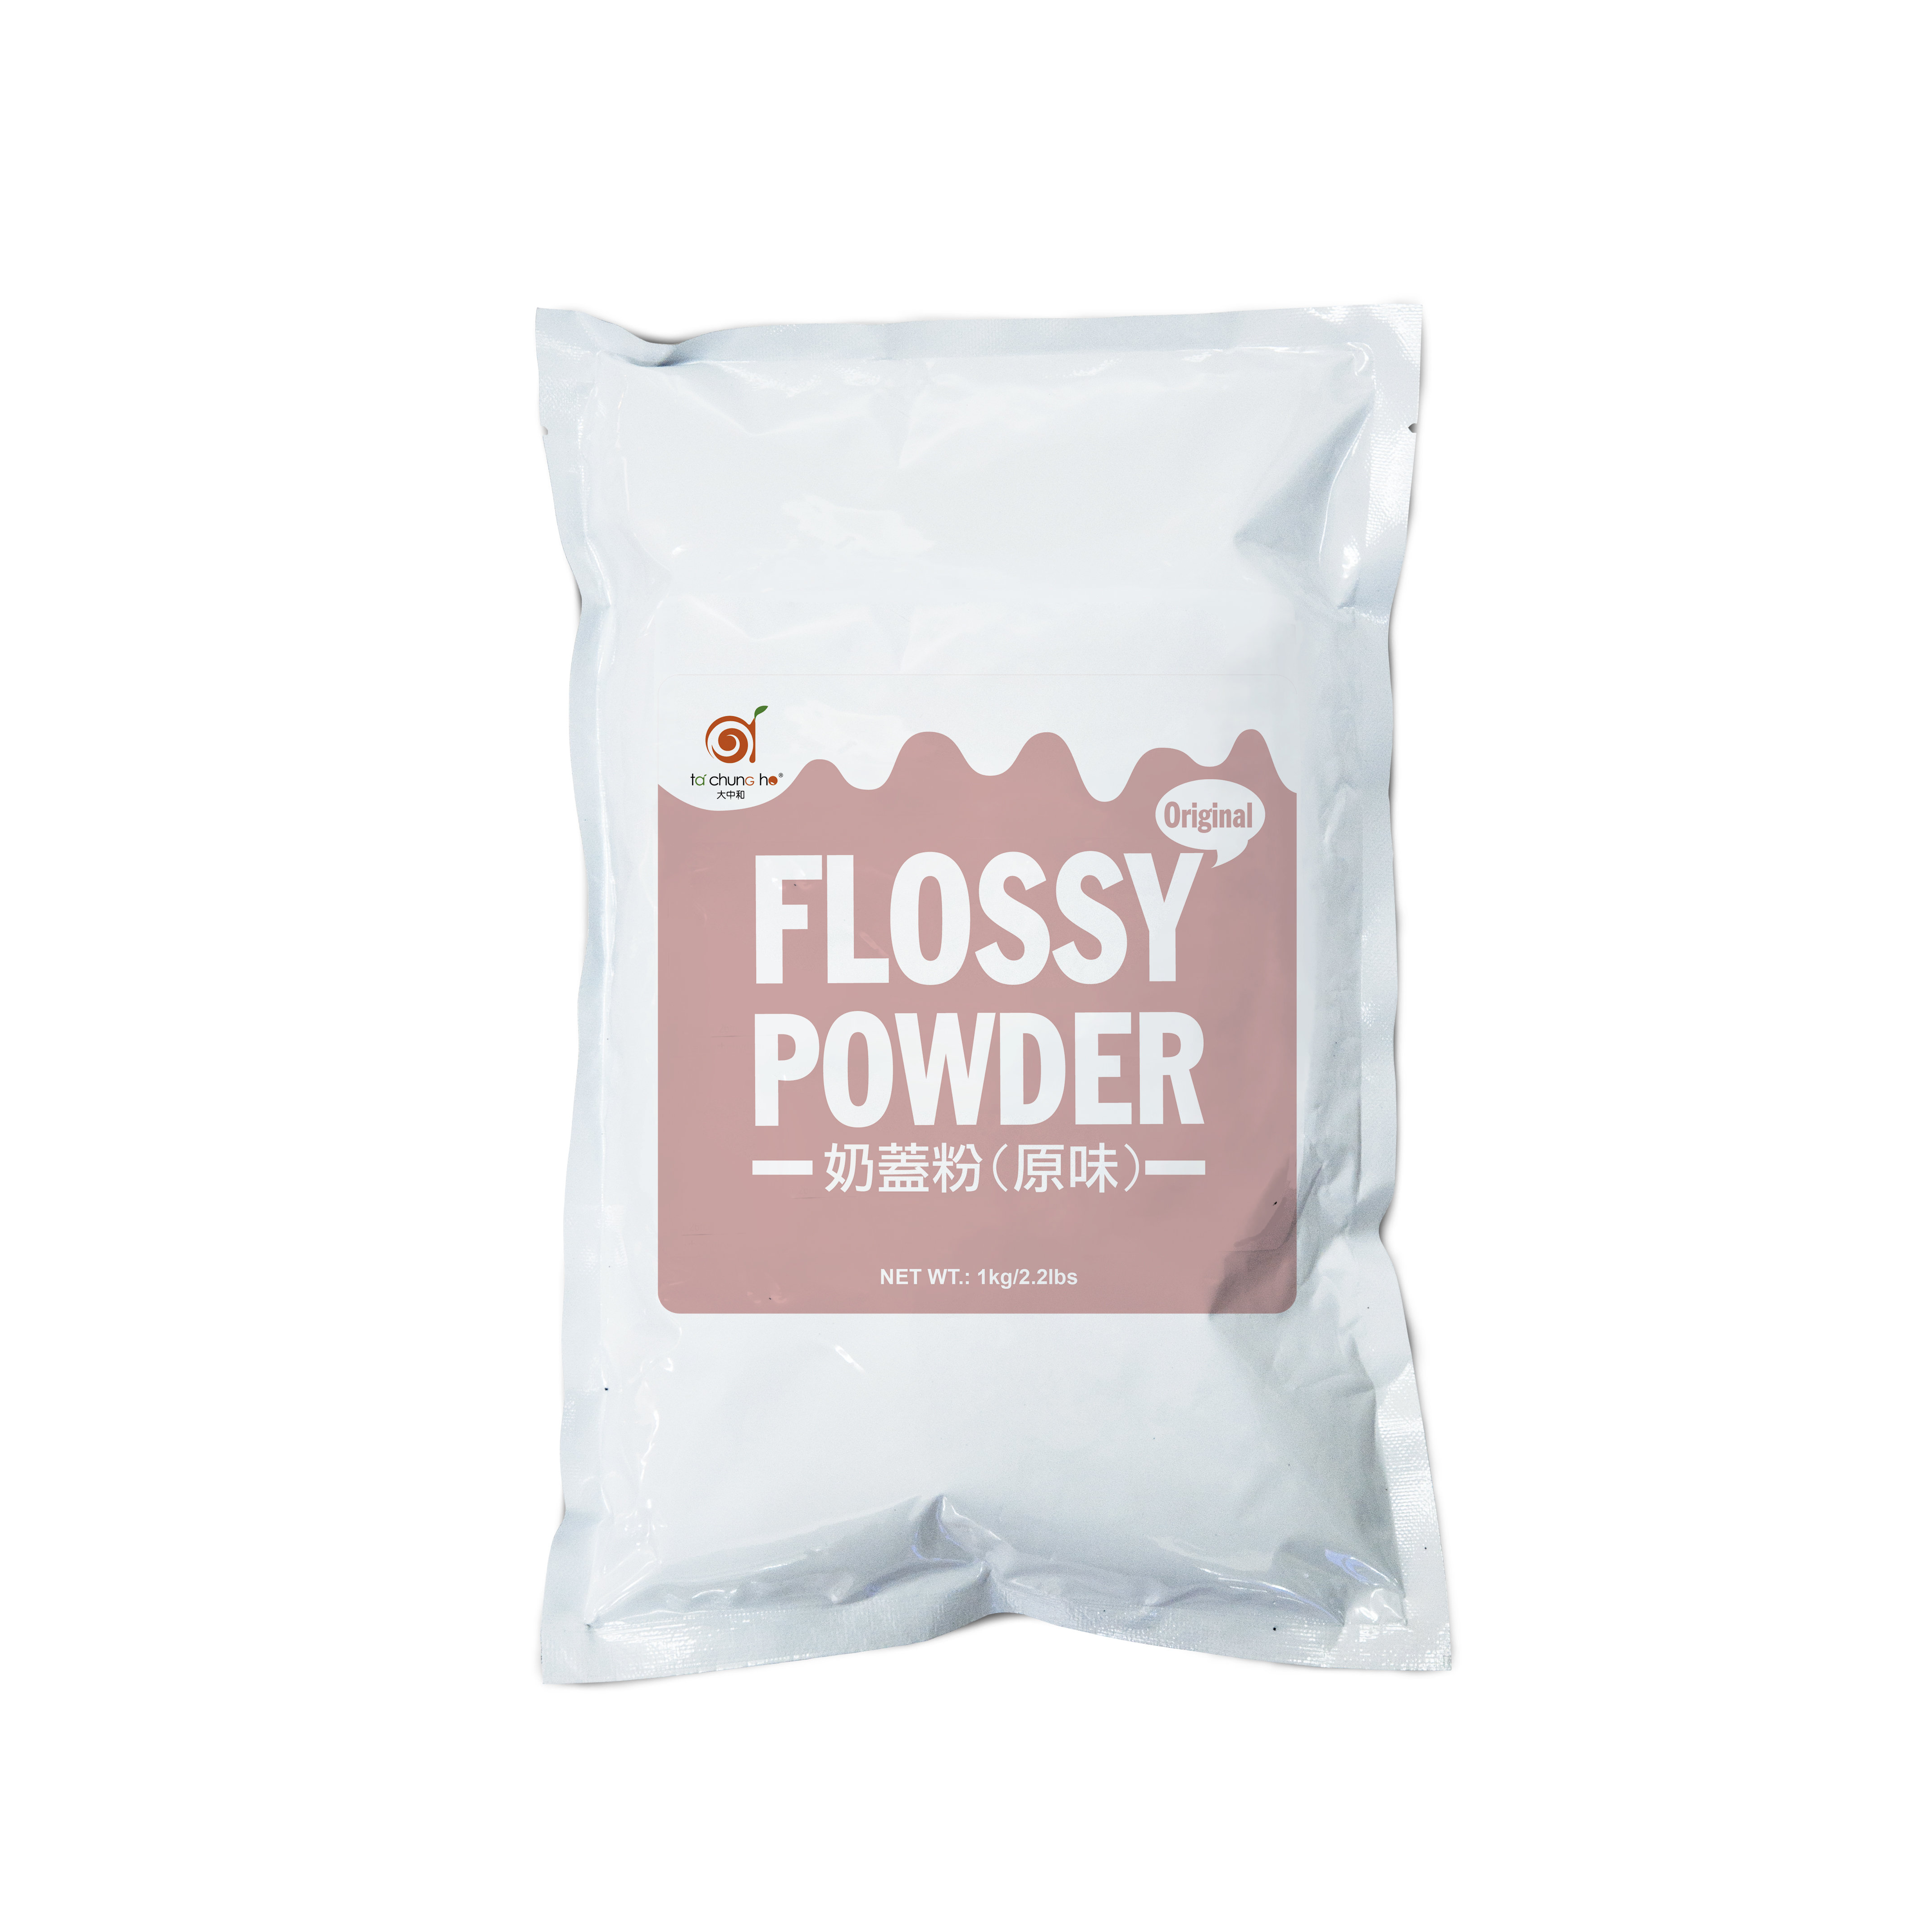 Flossy Powder (Original)